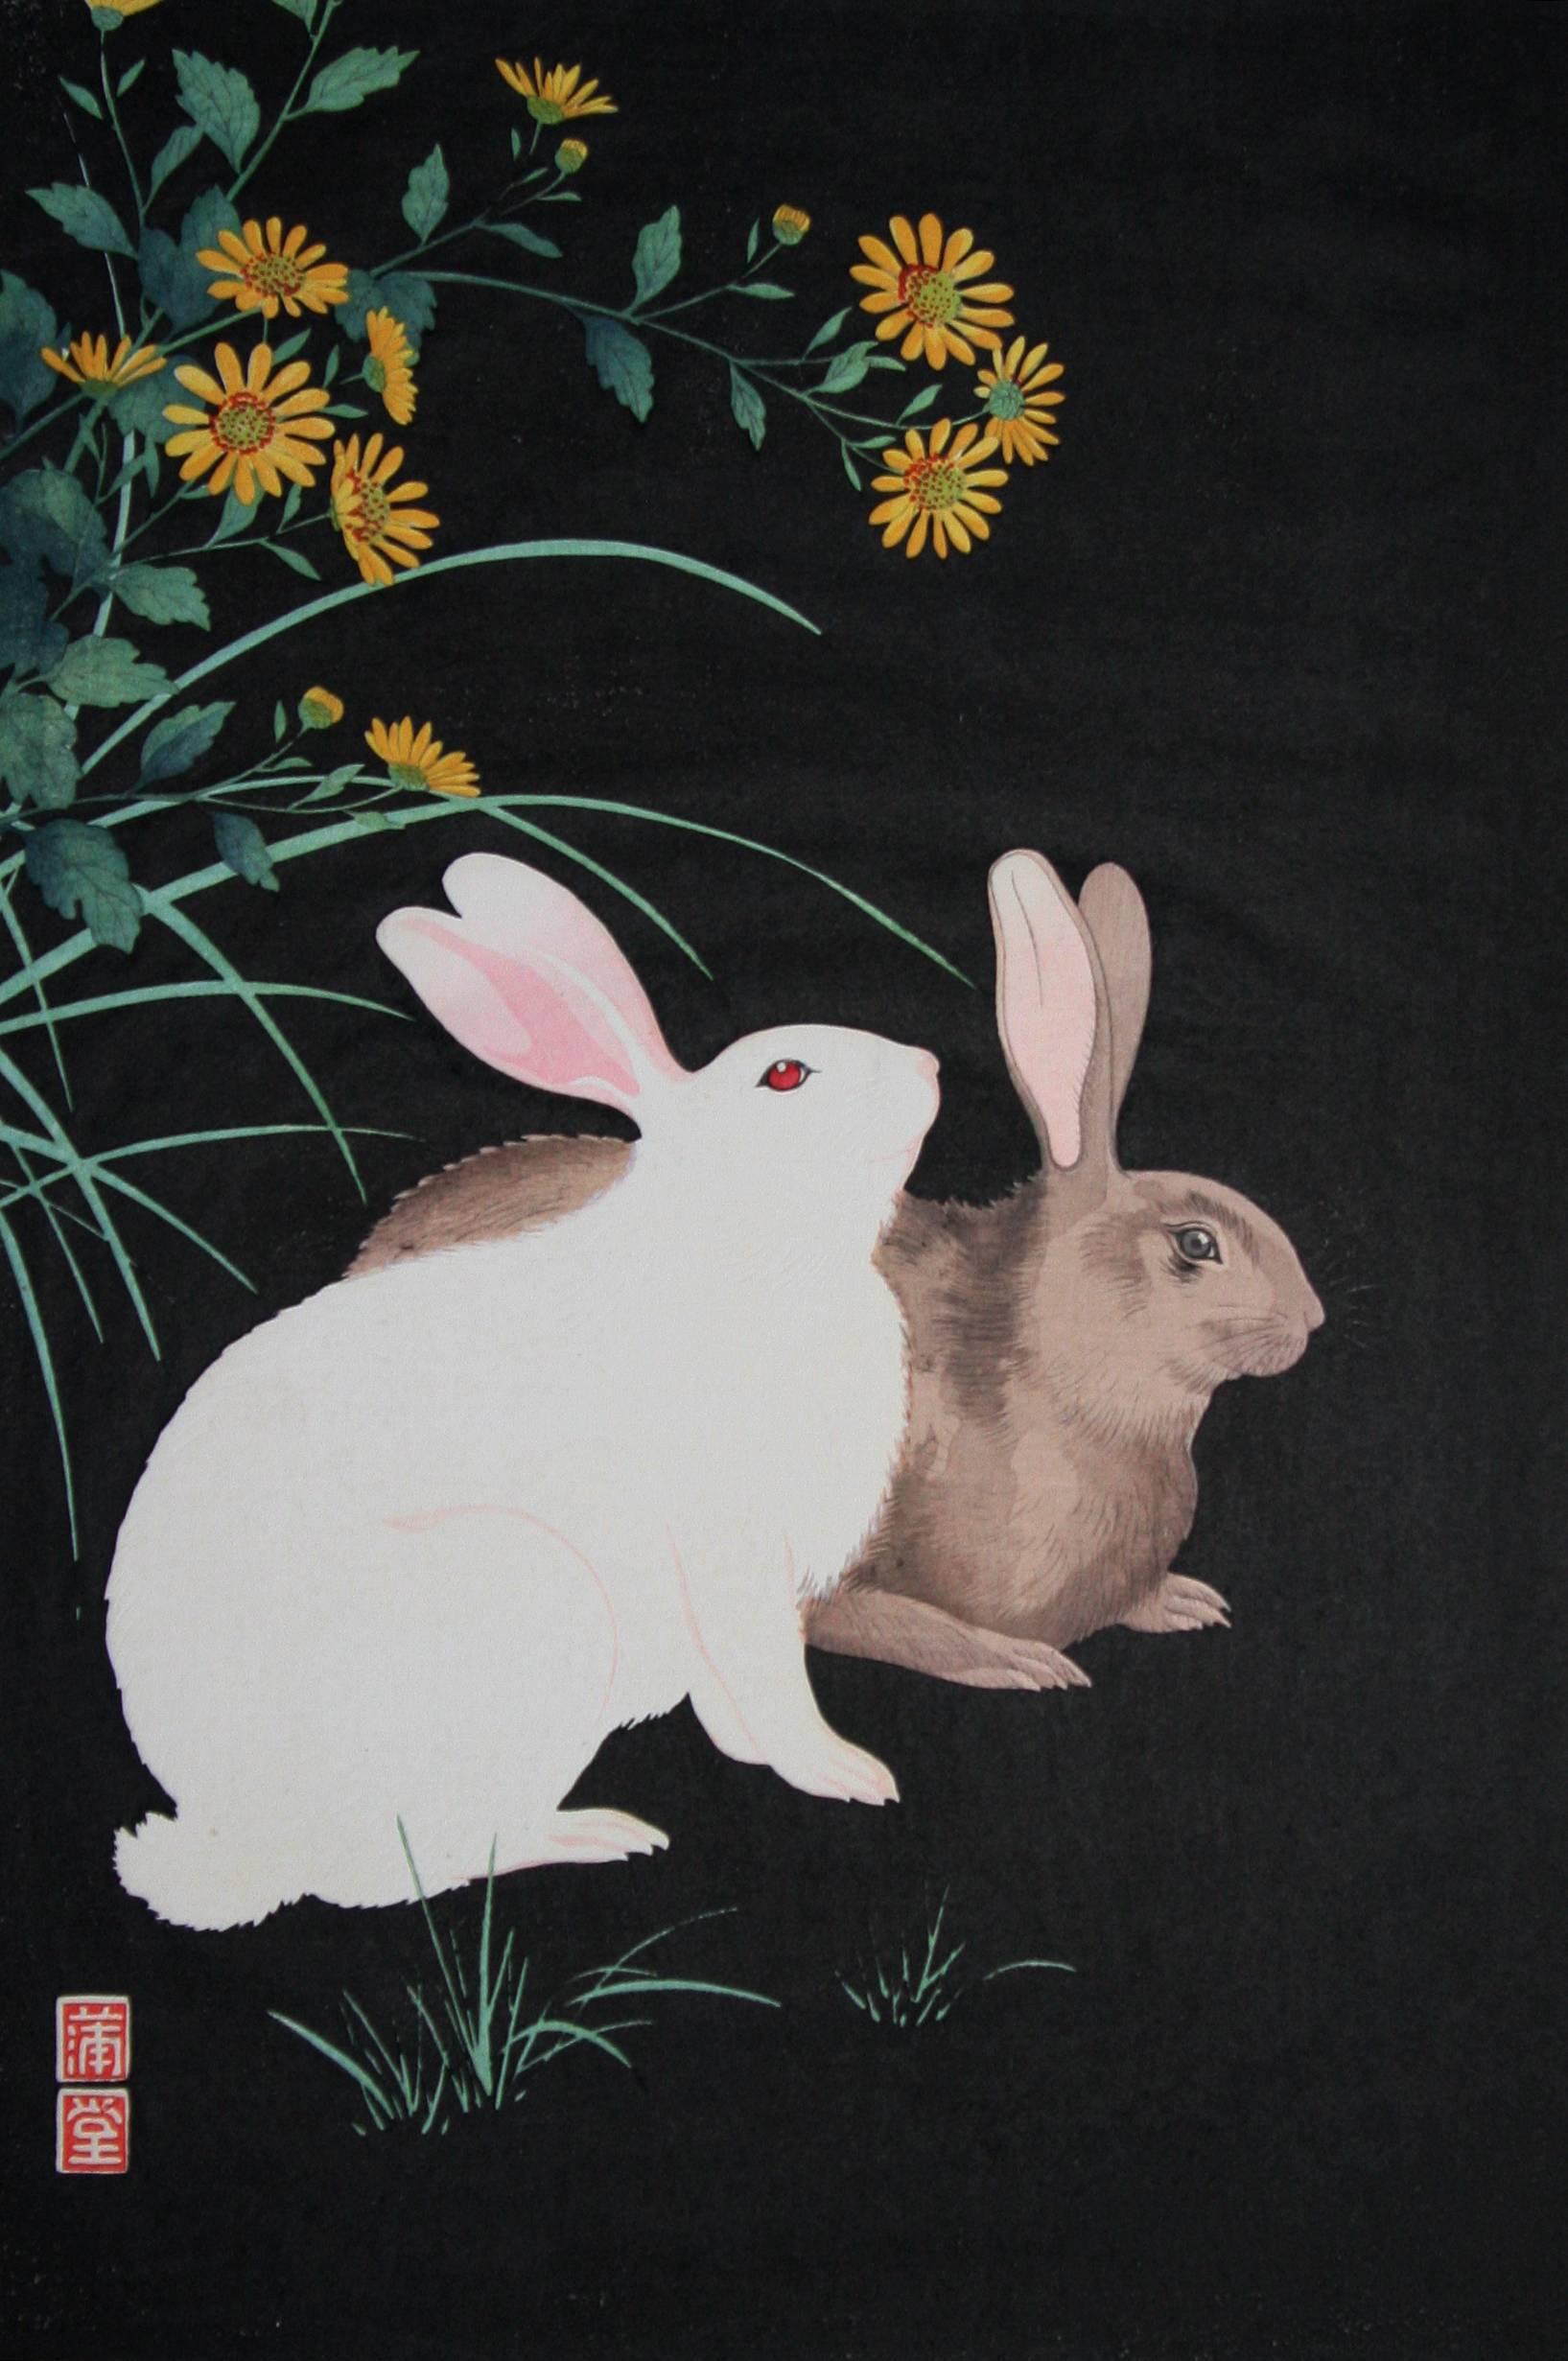 Nishimura Hodo Landscape Print - Two Rabbits at Night.